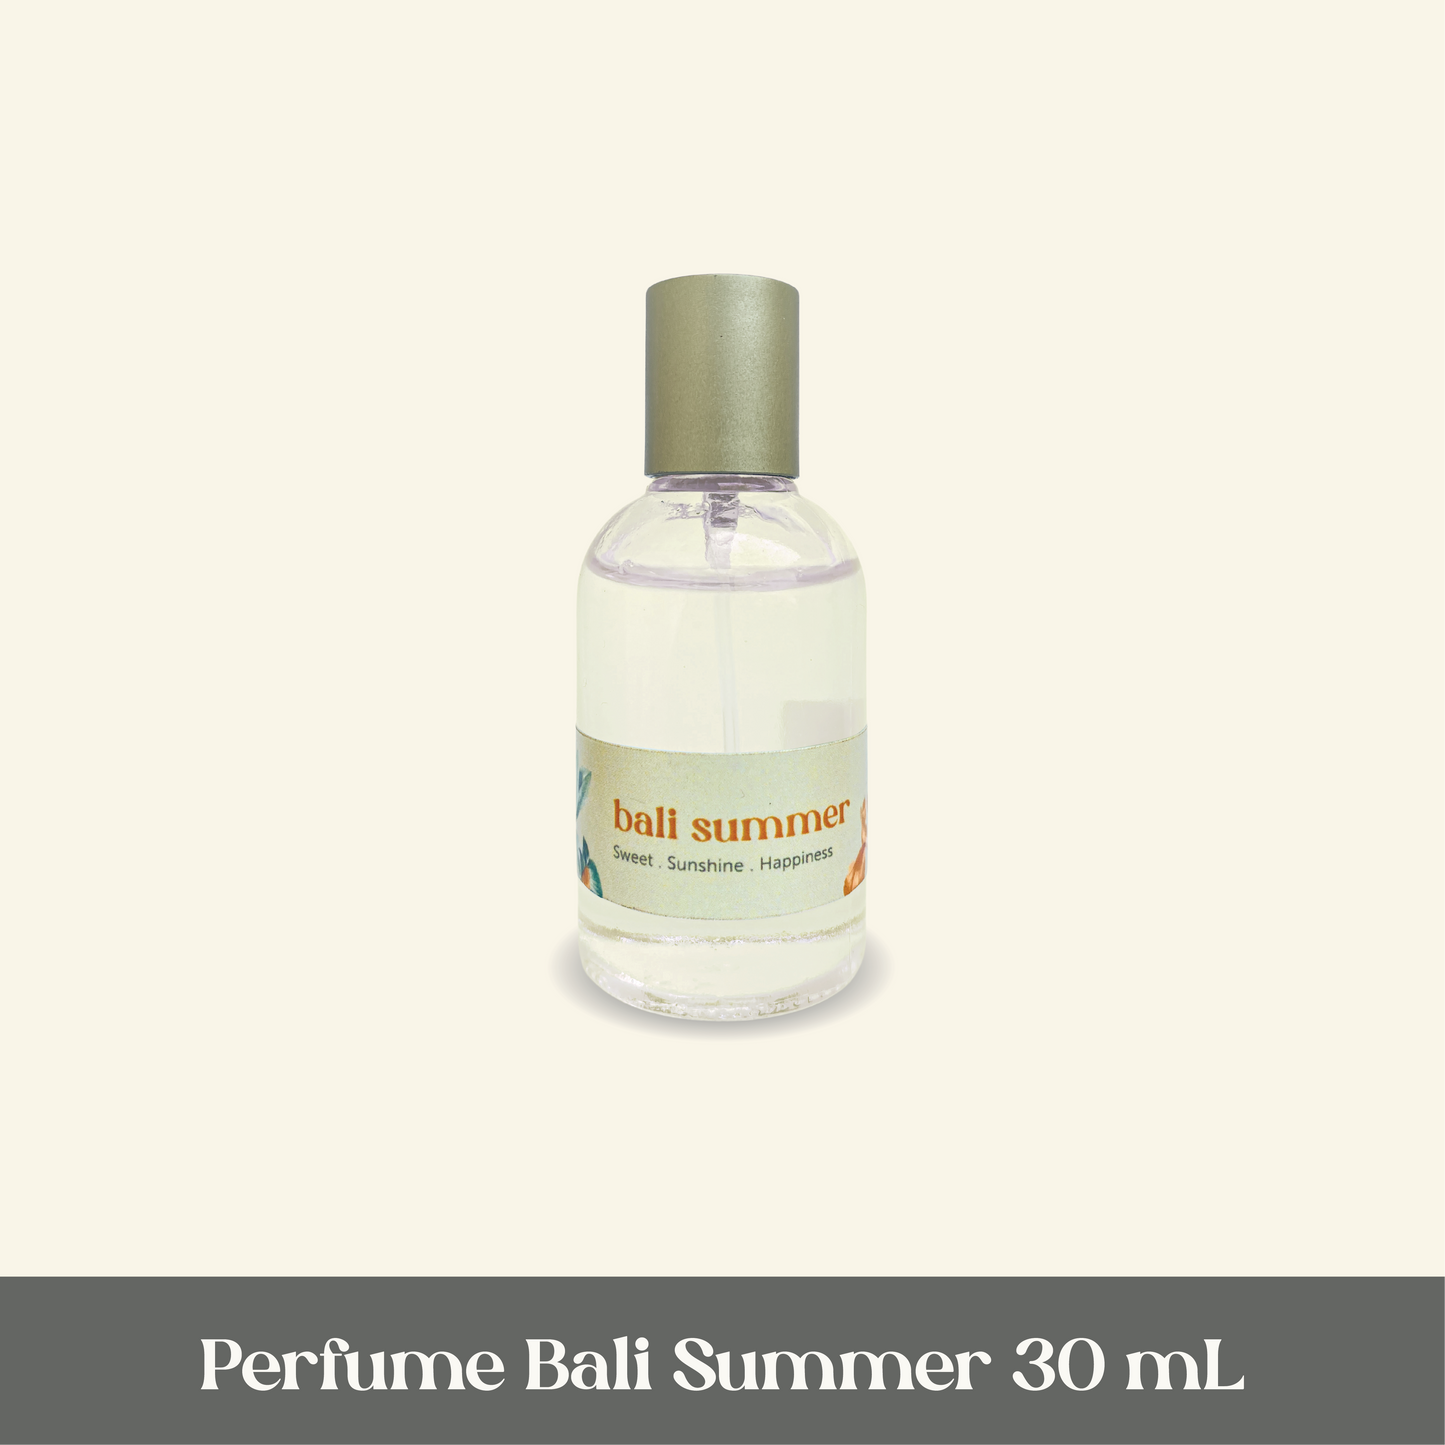 Perfume Bali Summer 30 ml